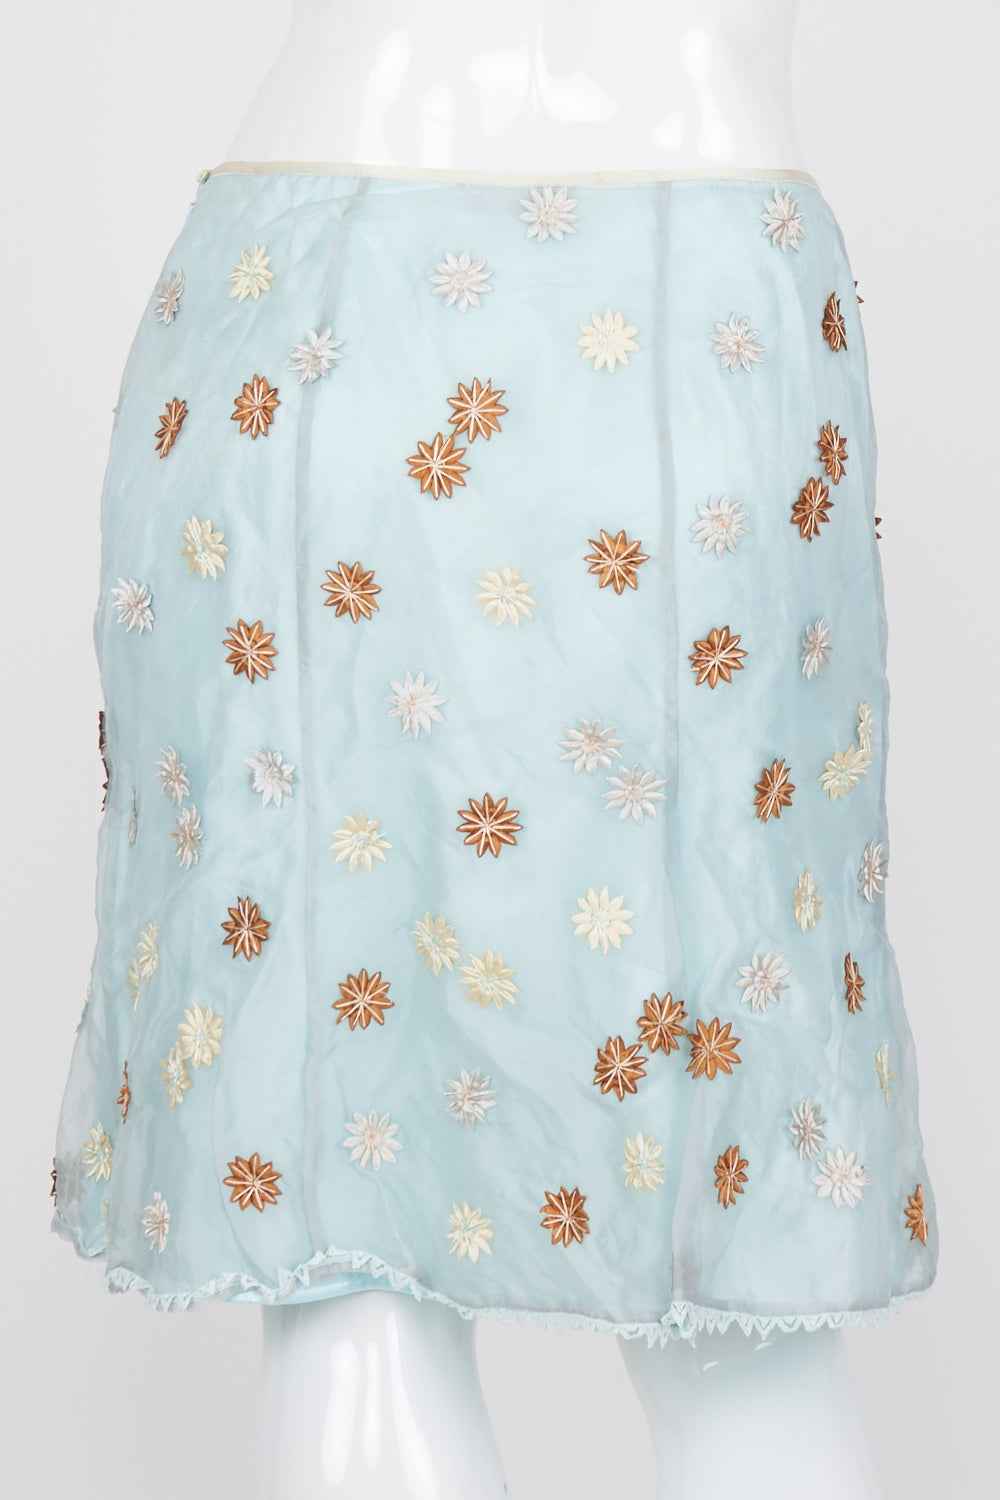 Anthea Crawford Blue Floral Silk Skirt 14